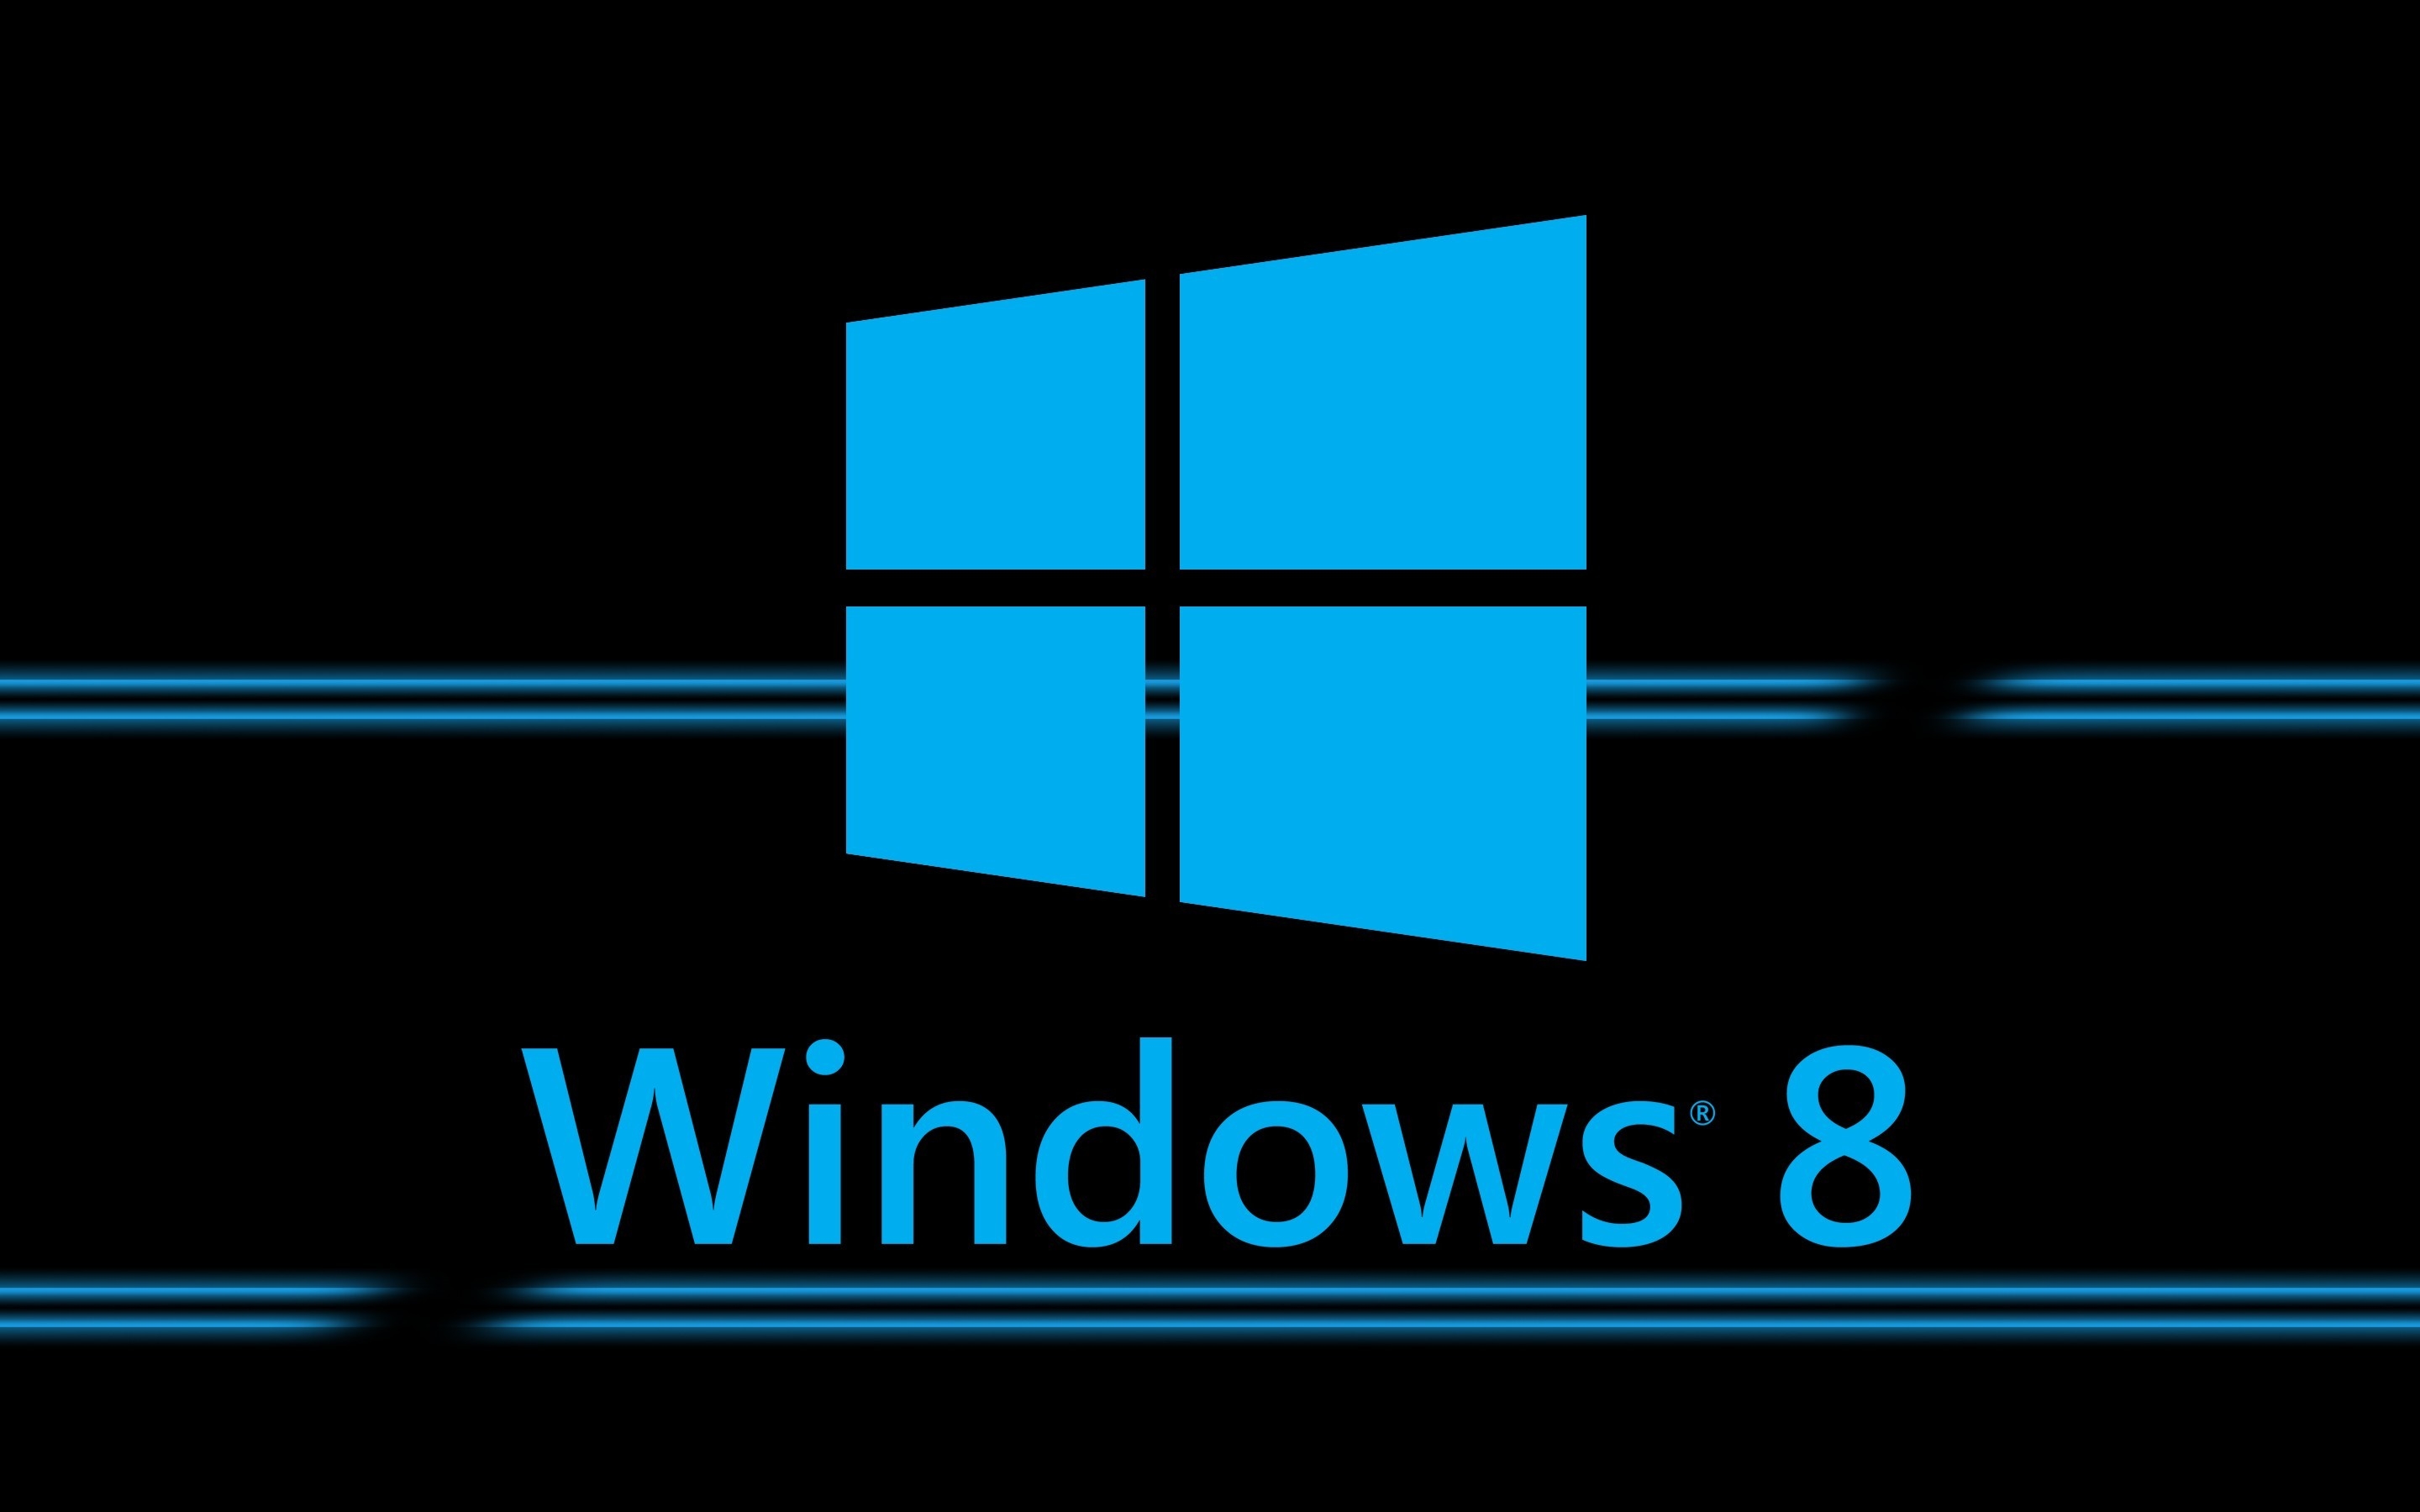 Windows 8 New for 2880 x 1800 Retina Display resolution